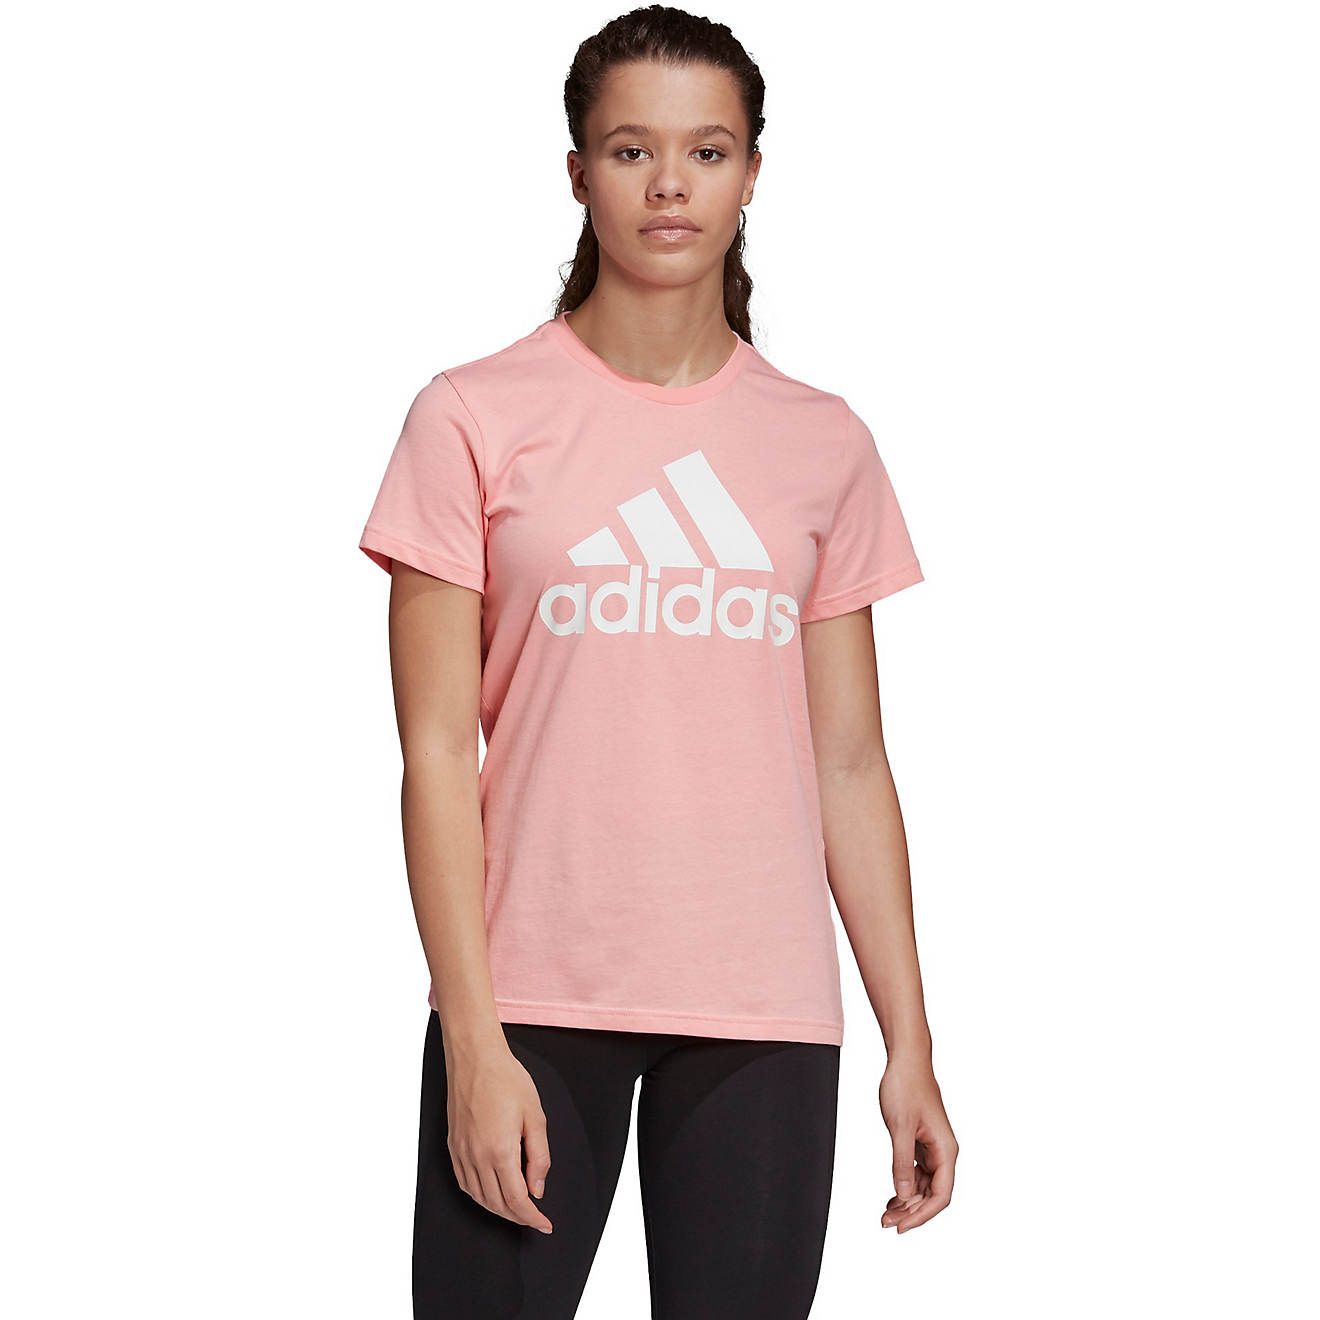 adidas Women's Basic Badge of Sport T-shirt | Academy Sports + Outdoor Affiliate